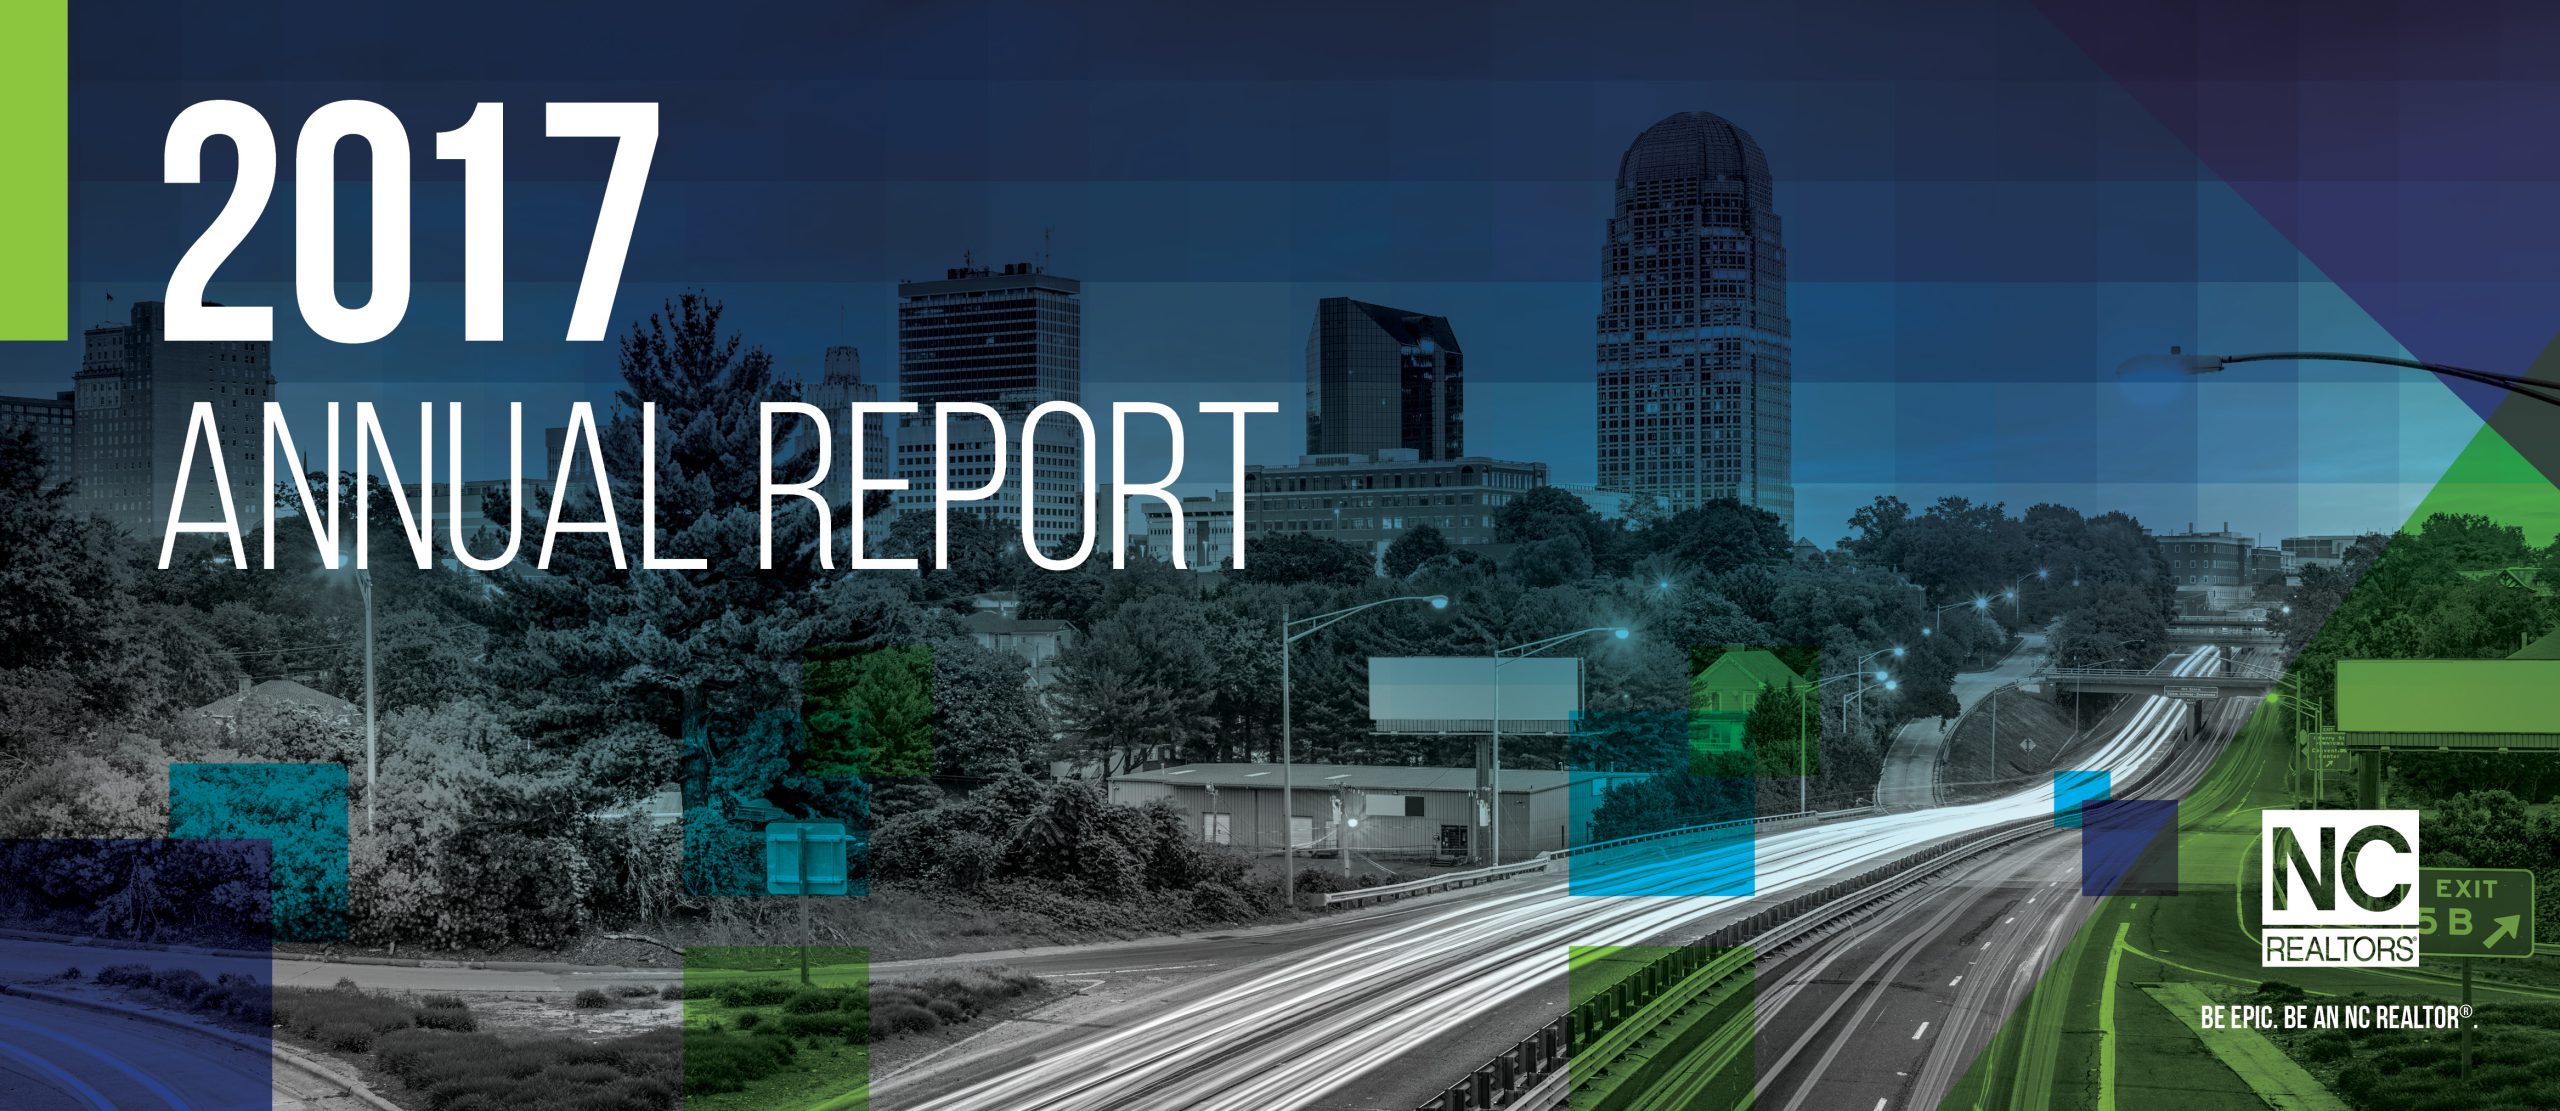 2017 Annual Report image